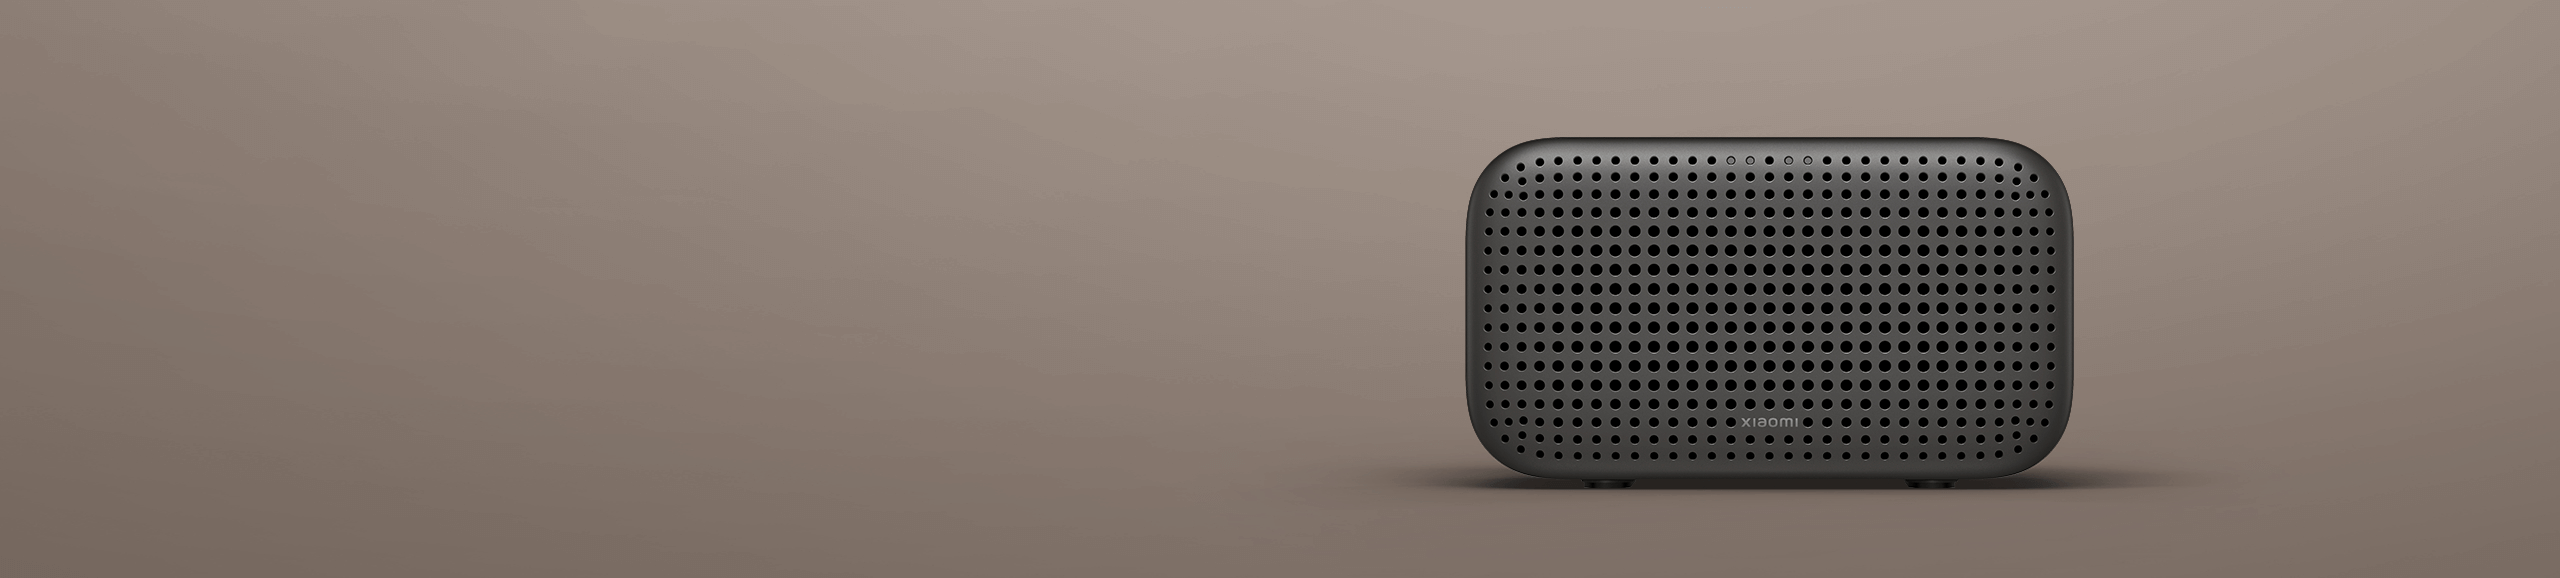 Xiaomi Smart Speaker Lite c/ Alexa - Melody Paraguay